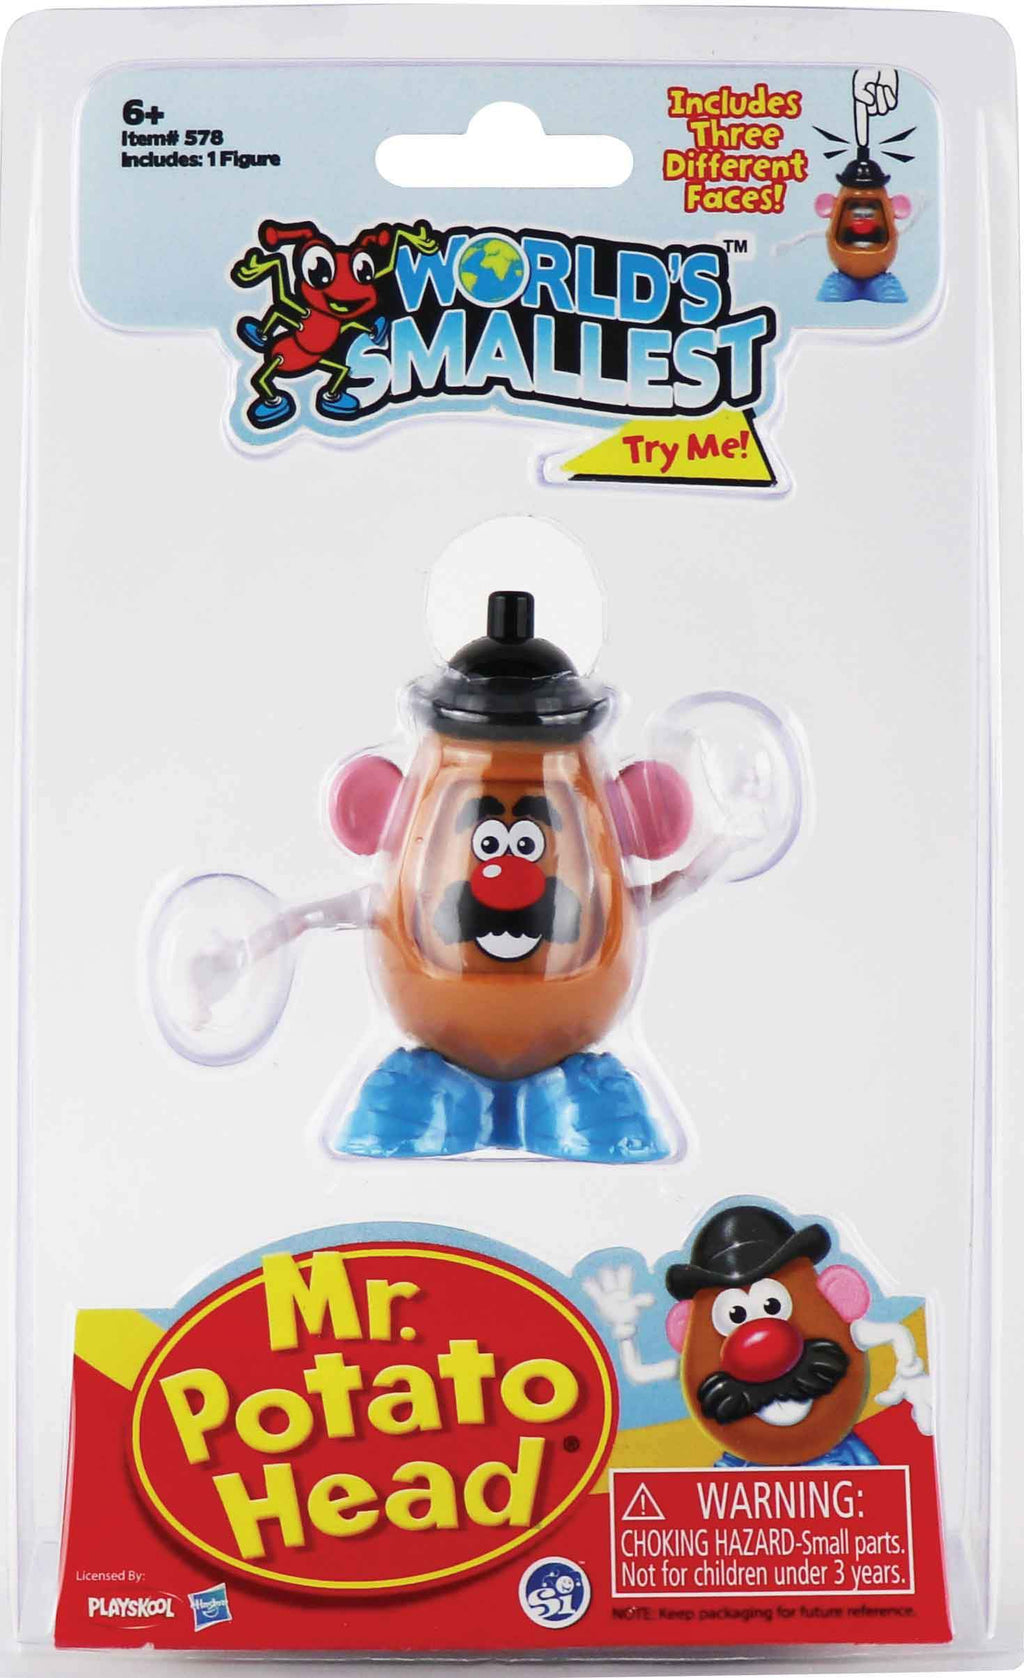 The best Mr. Potato Head